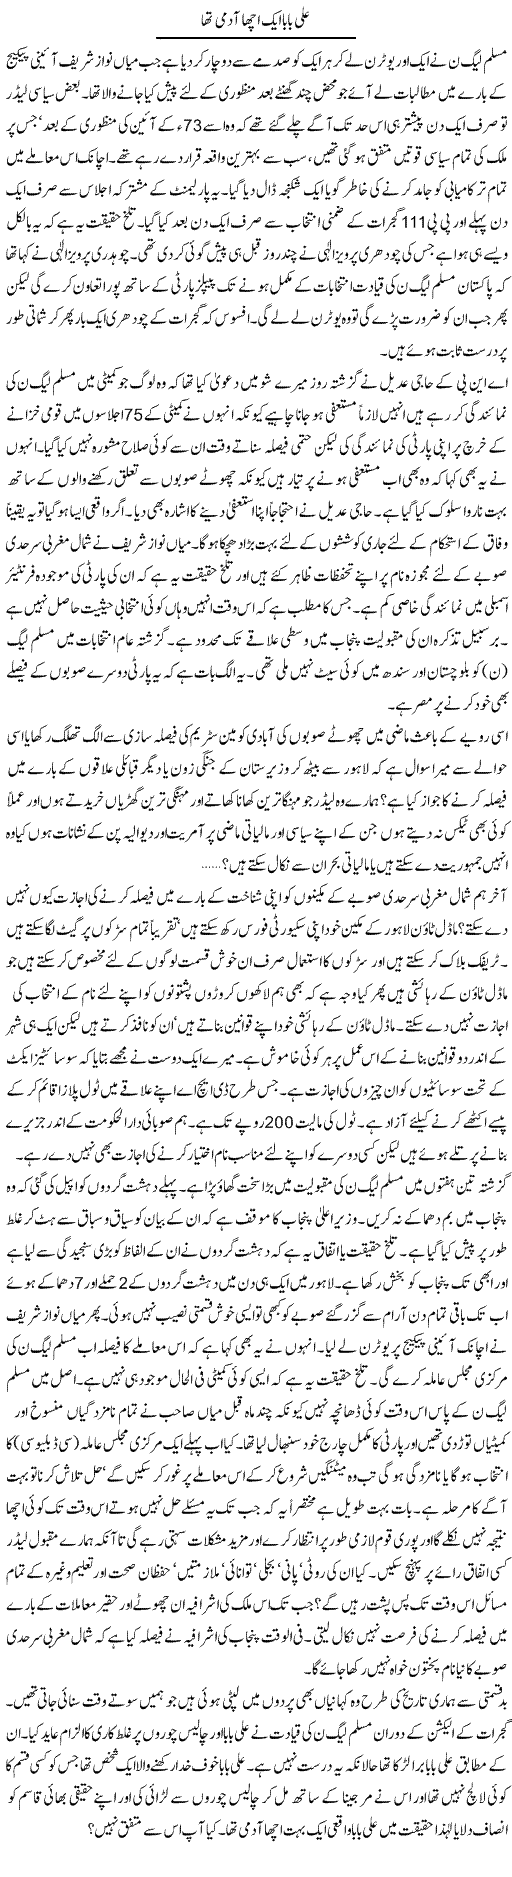 Ali Baba Express Column Mubashir Luqman 27 March 2010